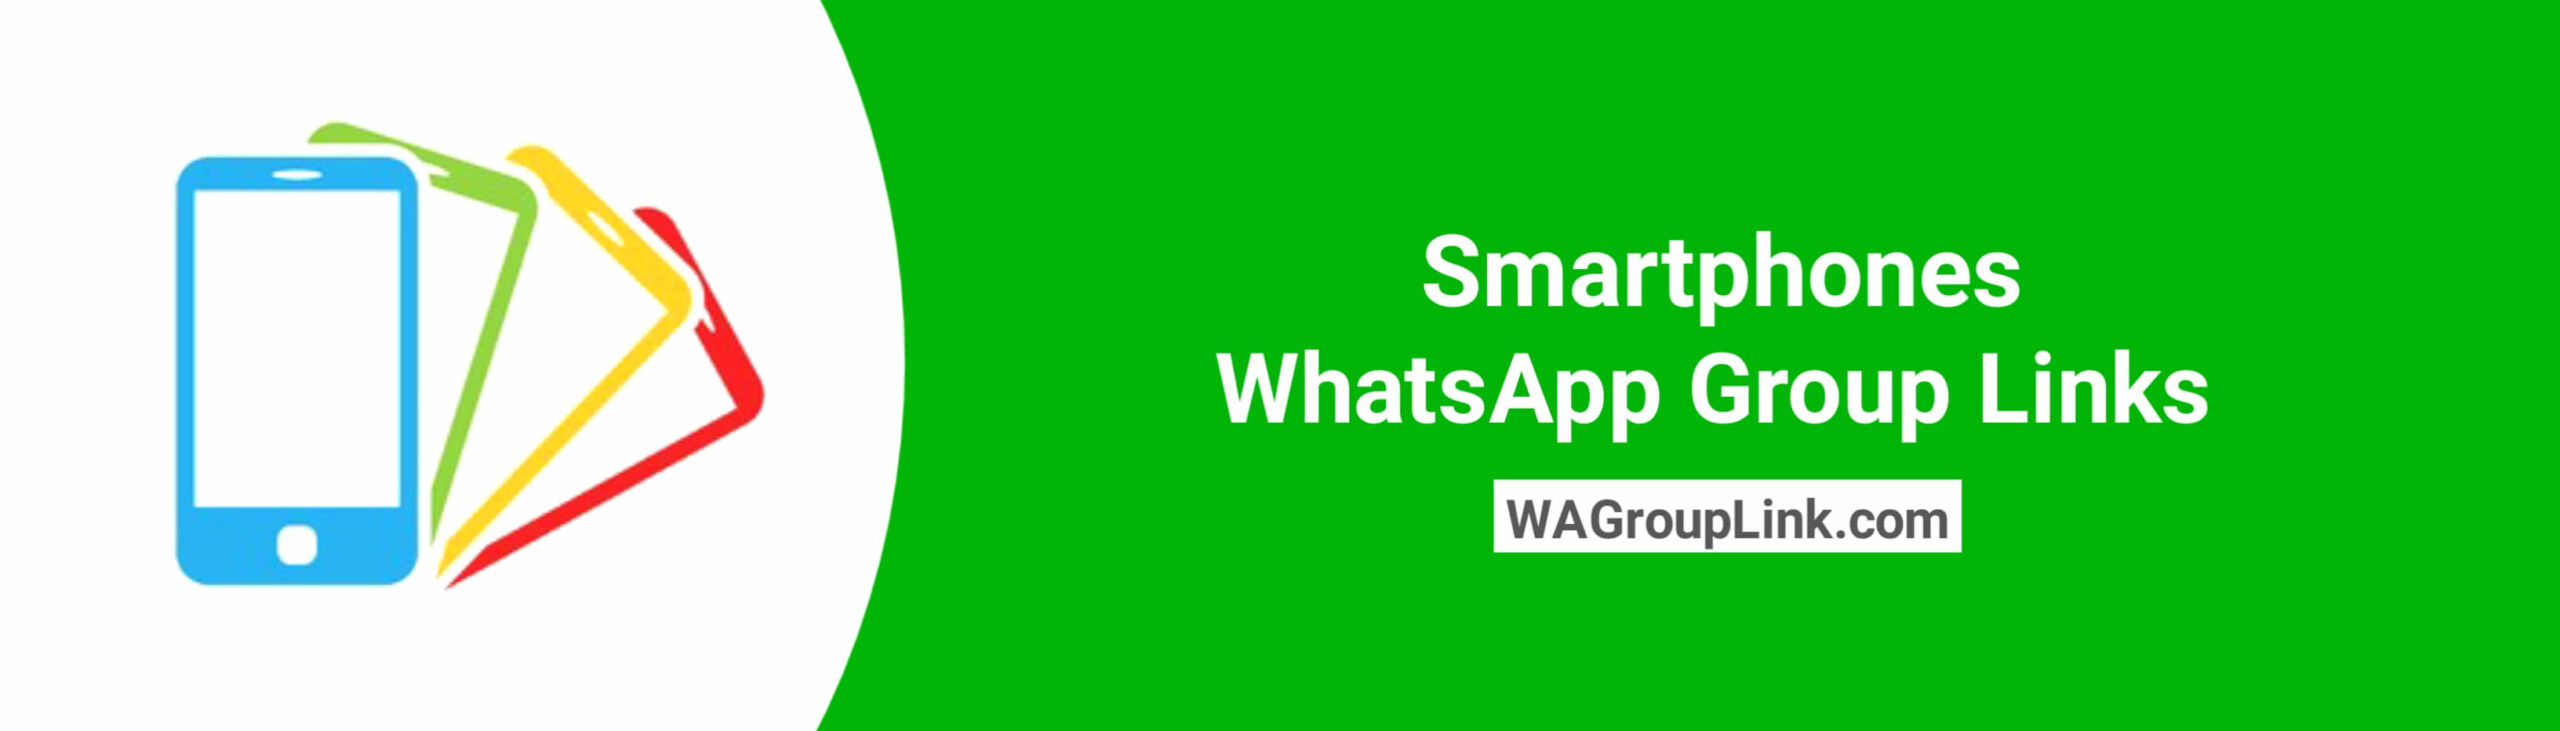 smartphone WhatsApp group links